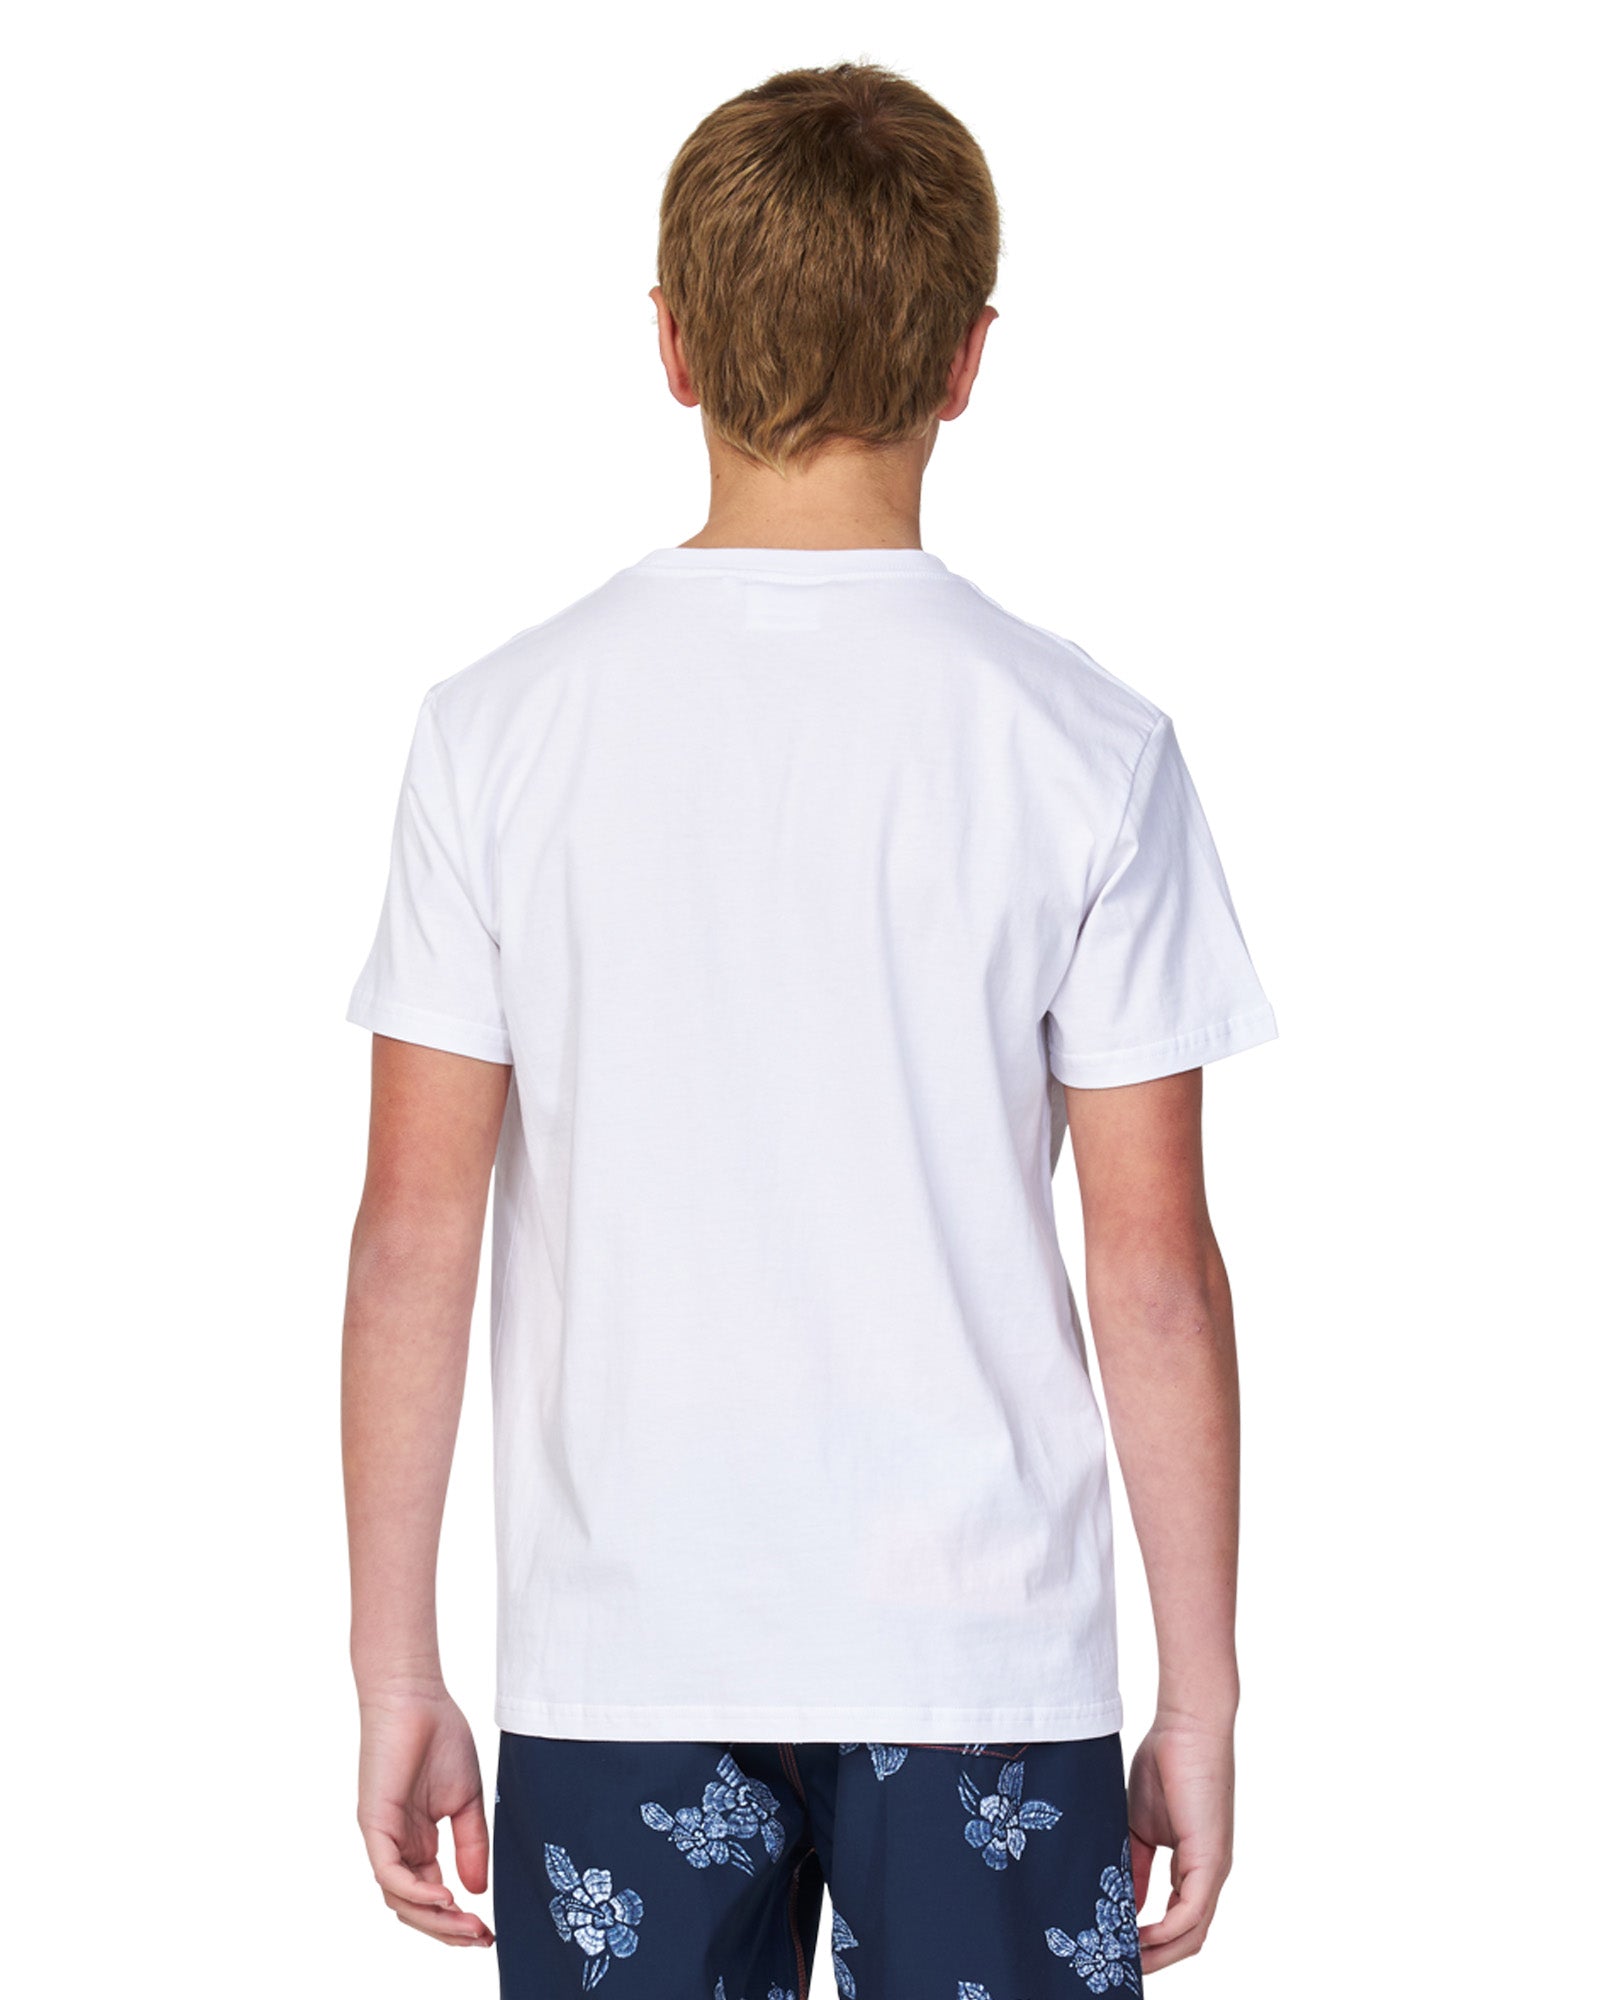 Boys - T-Shirt - Logo Tee - White